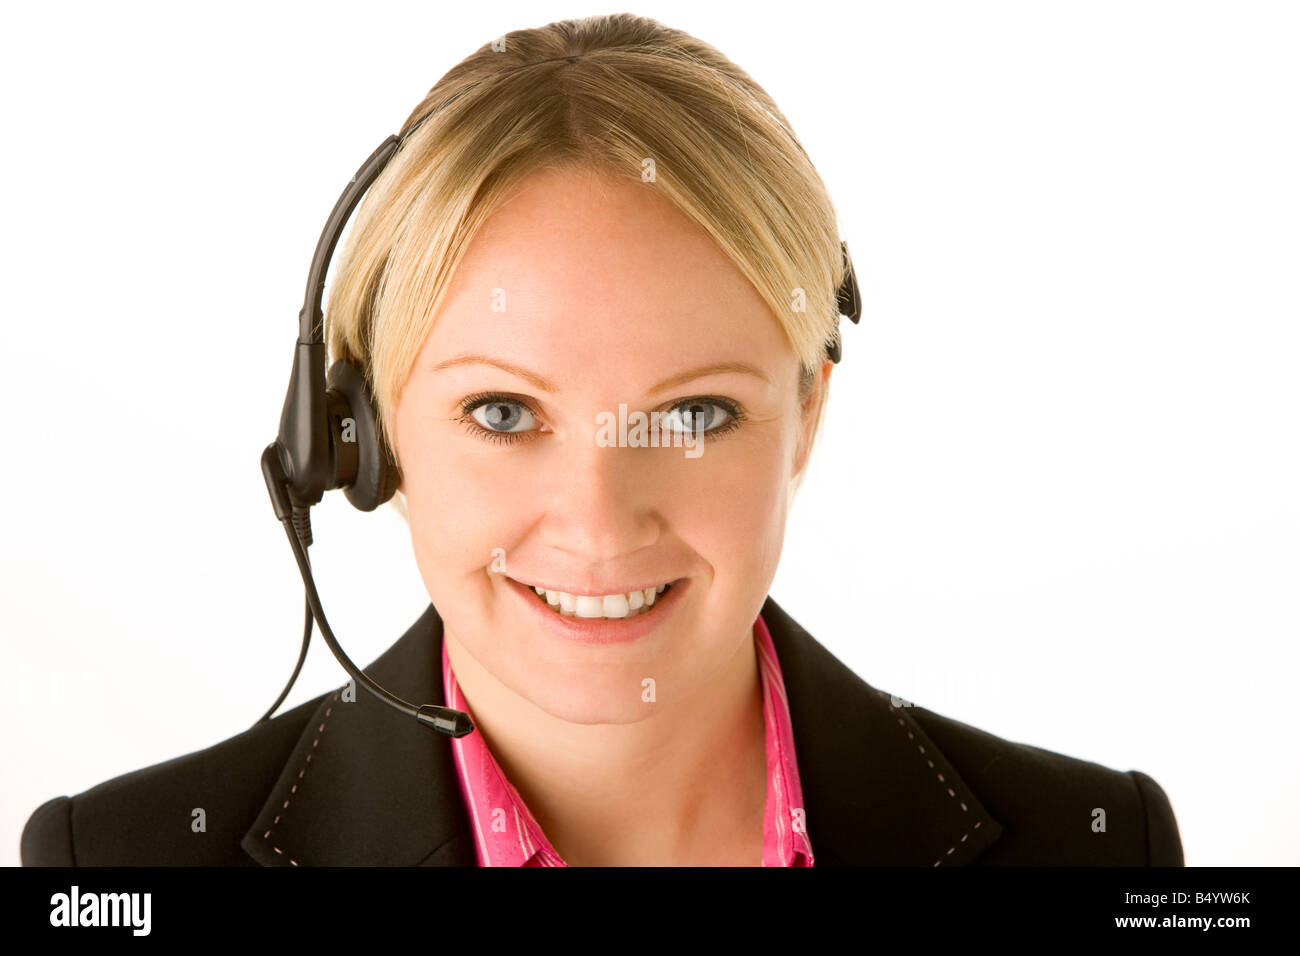 Customer Service Representative With Headset Stock Photo